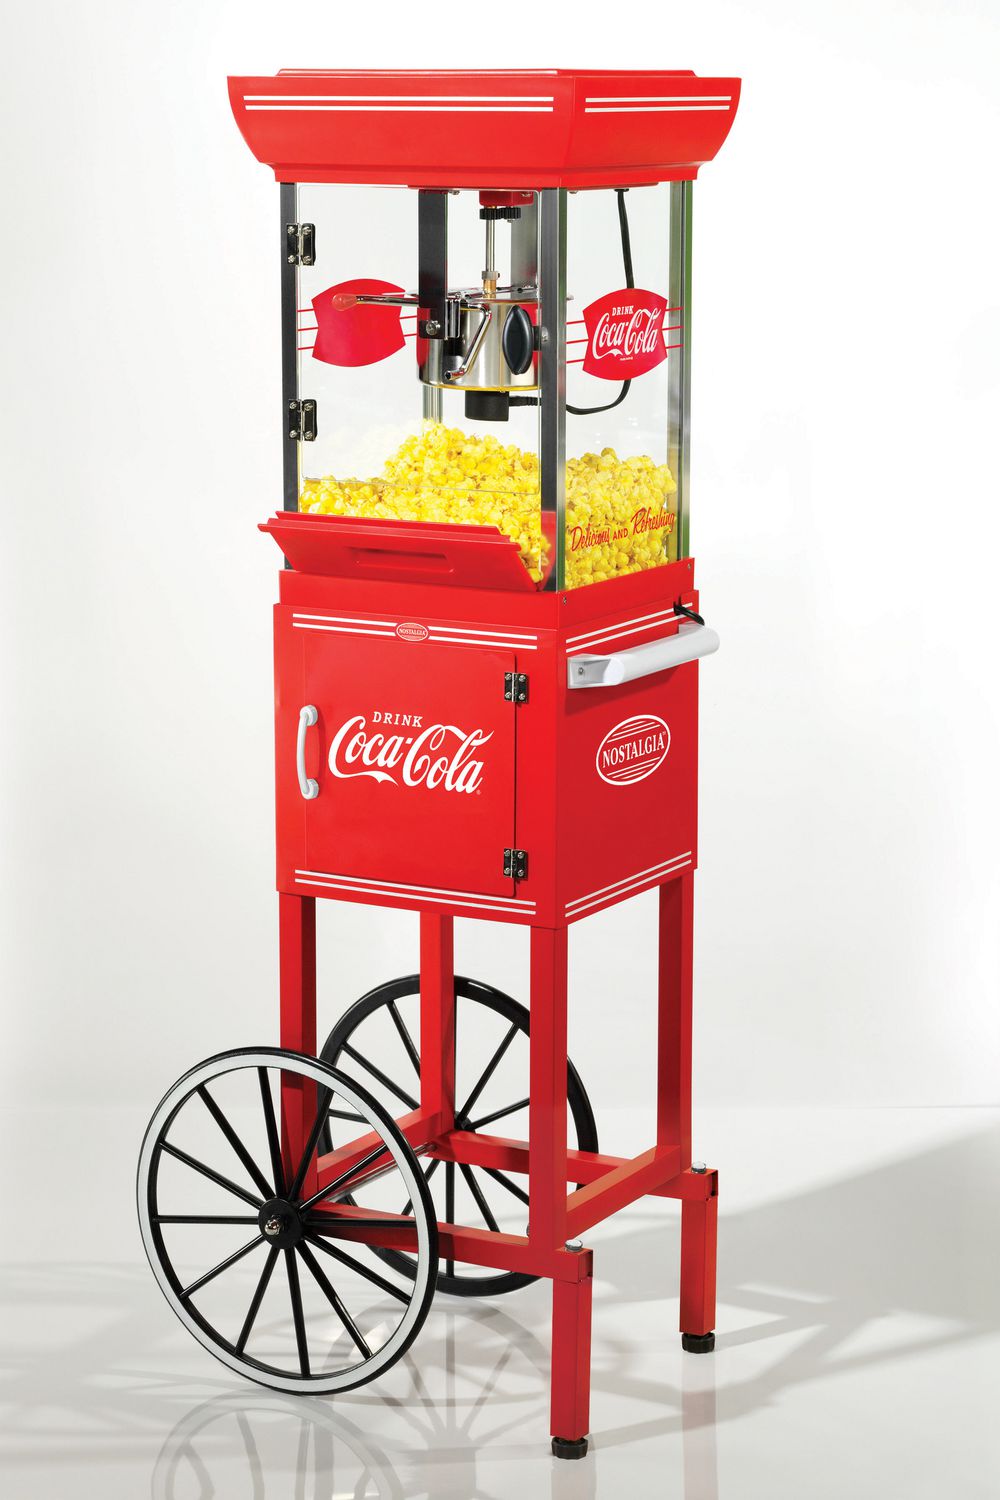 cart popcorn machine